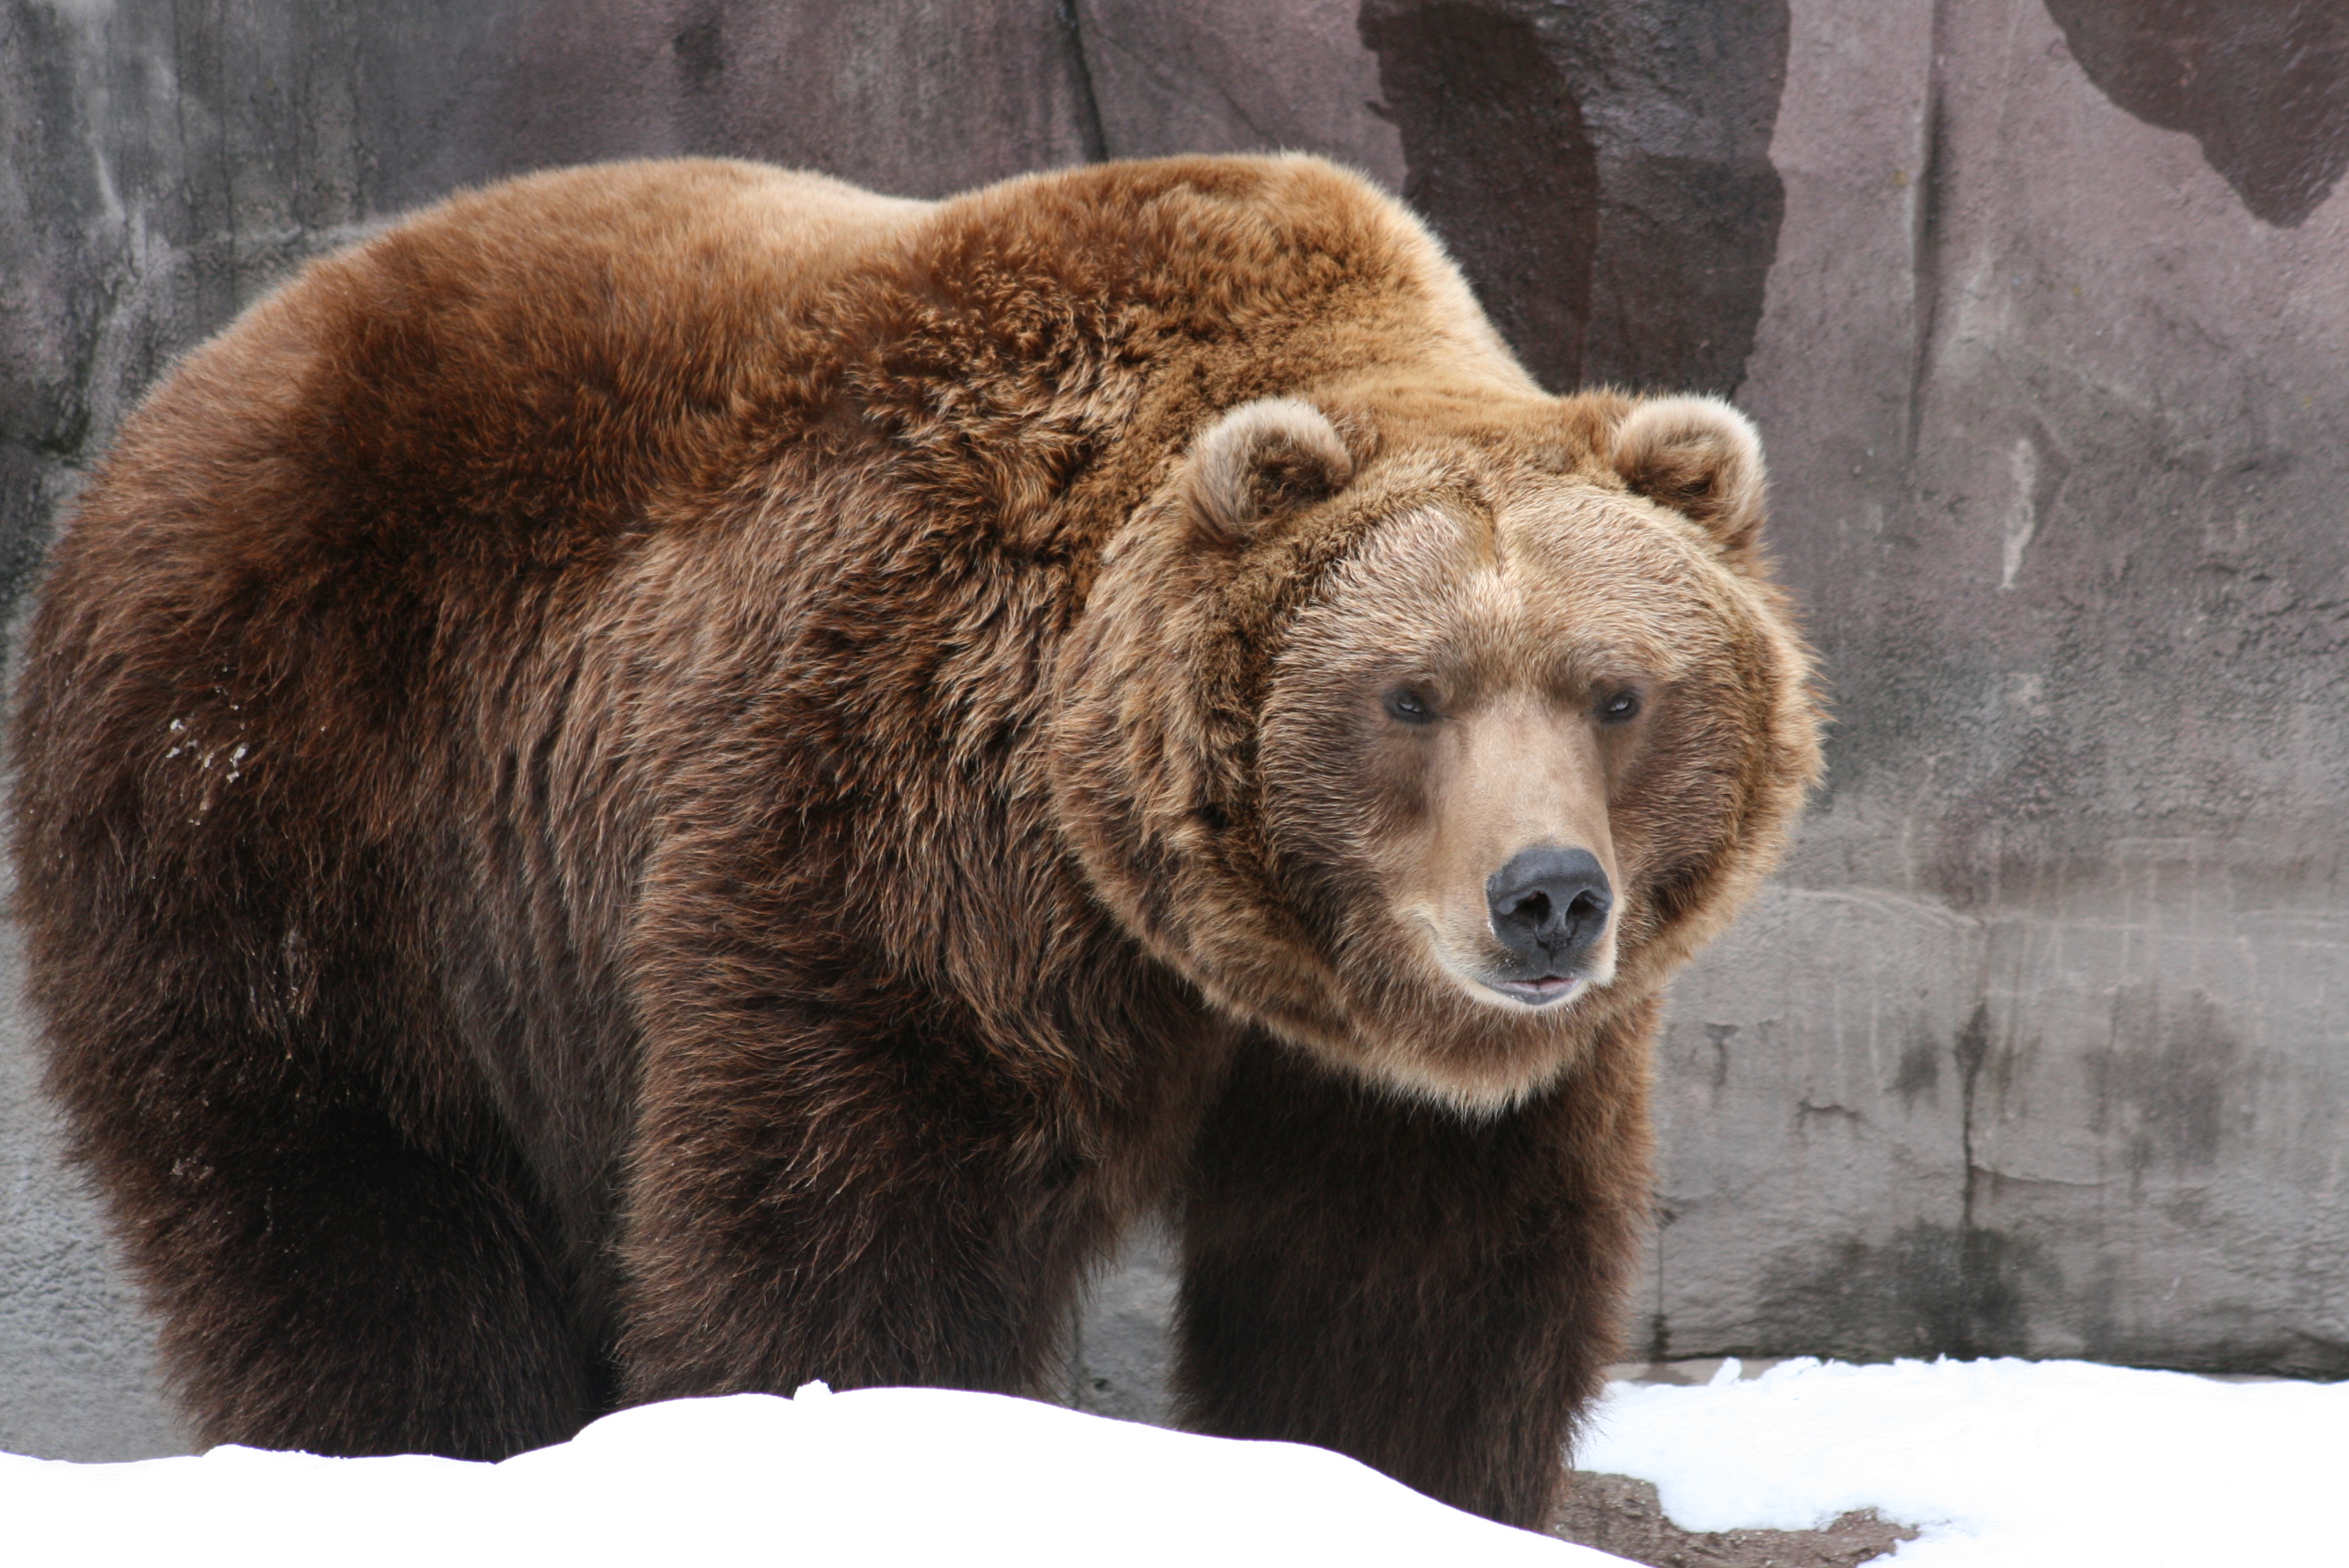 Grizzly Bear HD Wallpaper